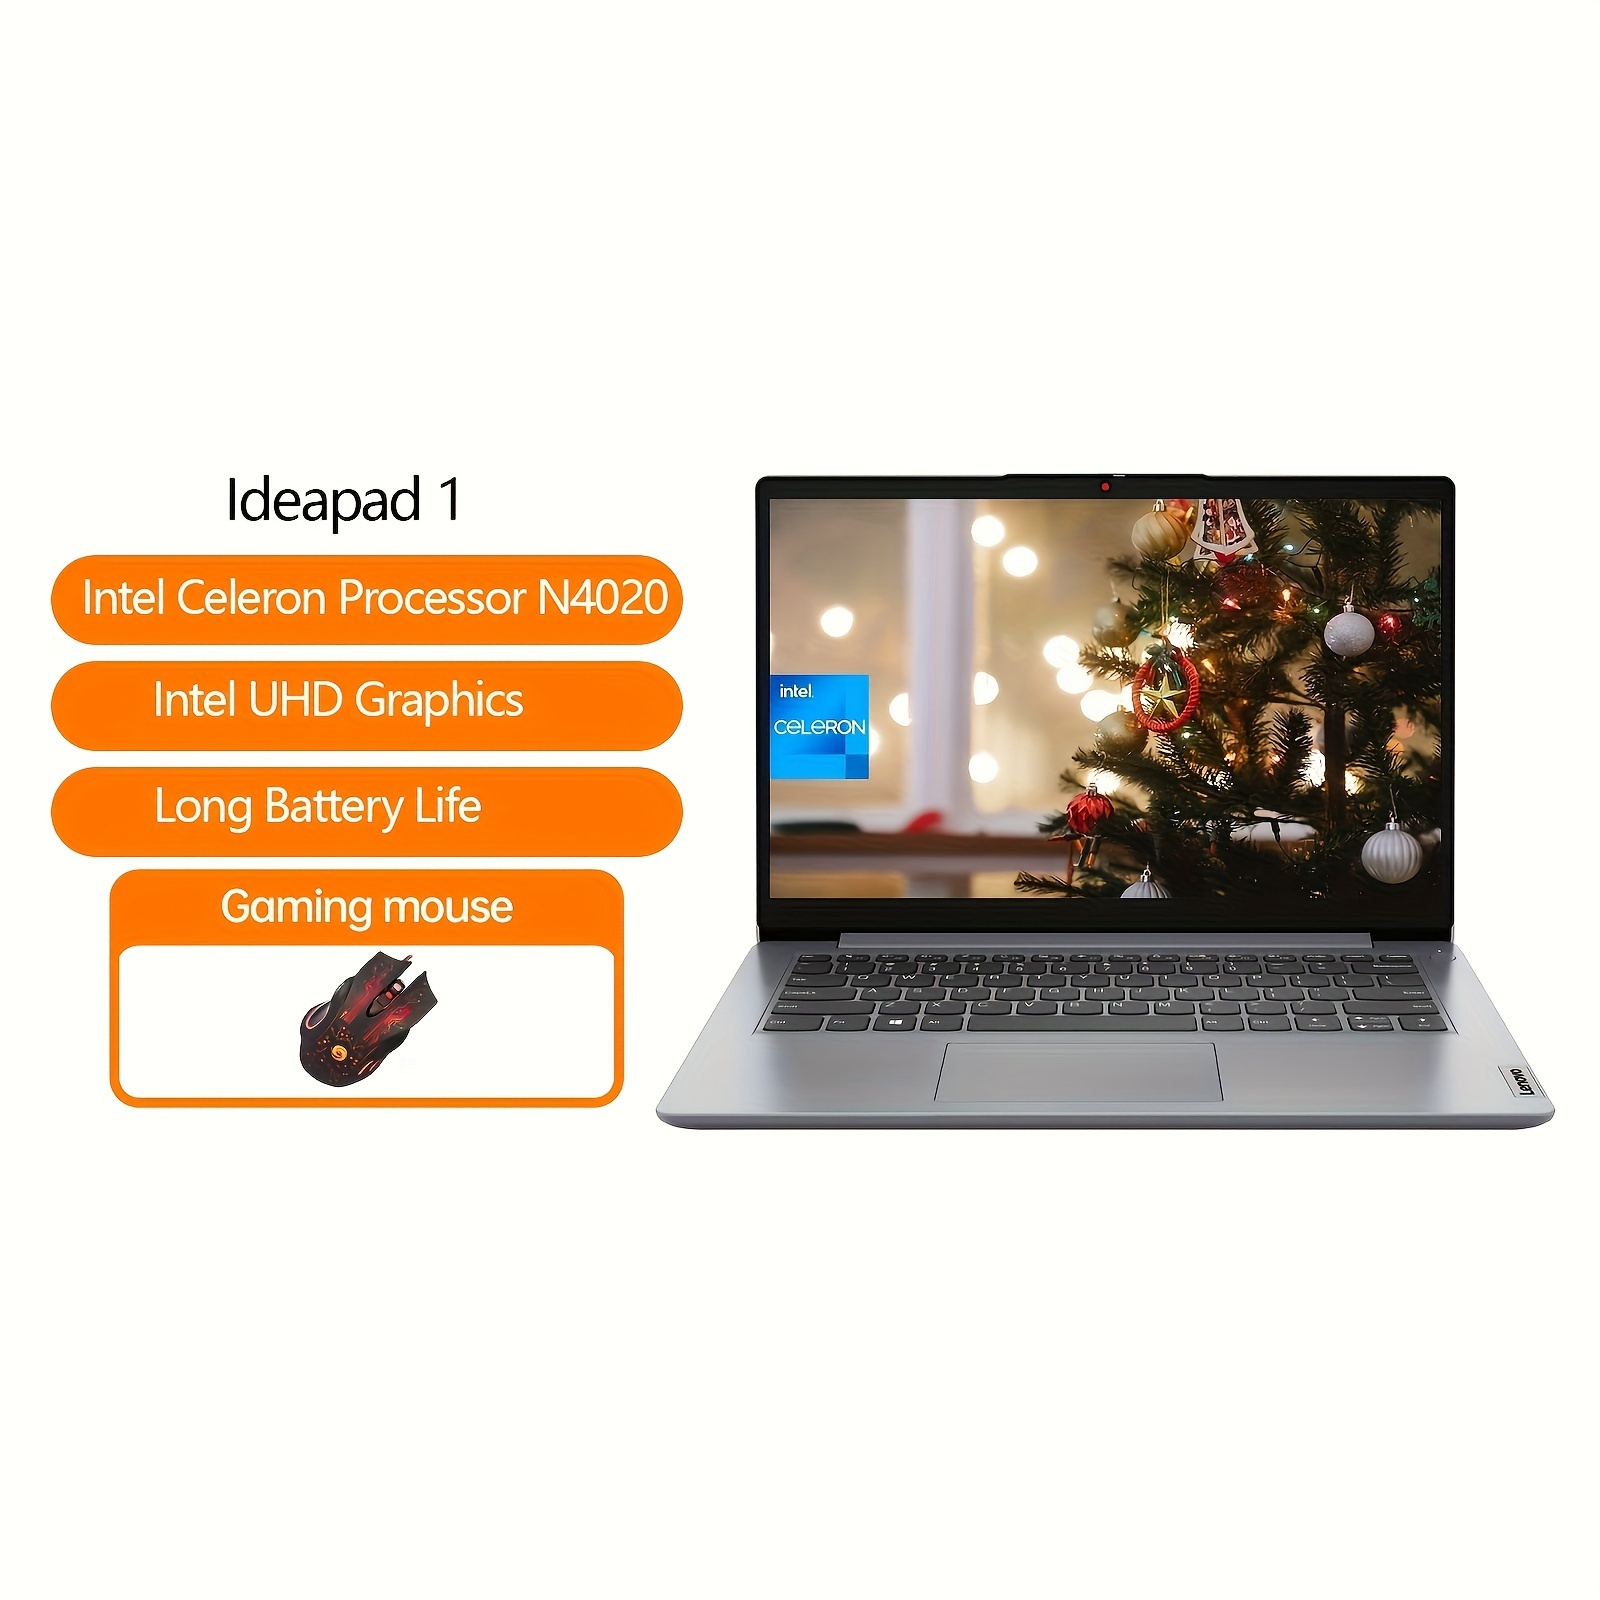 

Lenovo Ideapad Laptop For Student & Business - 14'' Hd Intel Celeron Processor N4020, 4gb Ram, 64gb Storage, Up To 10h Long Battery, Webcam, Wi-fi 6, Windows 11 S, Grey